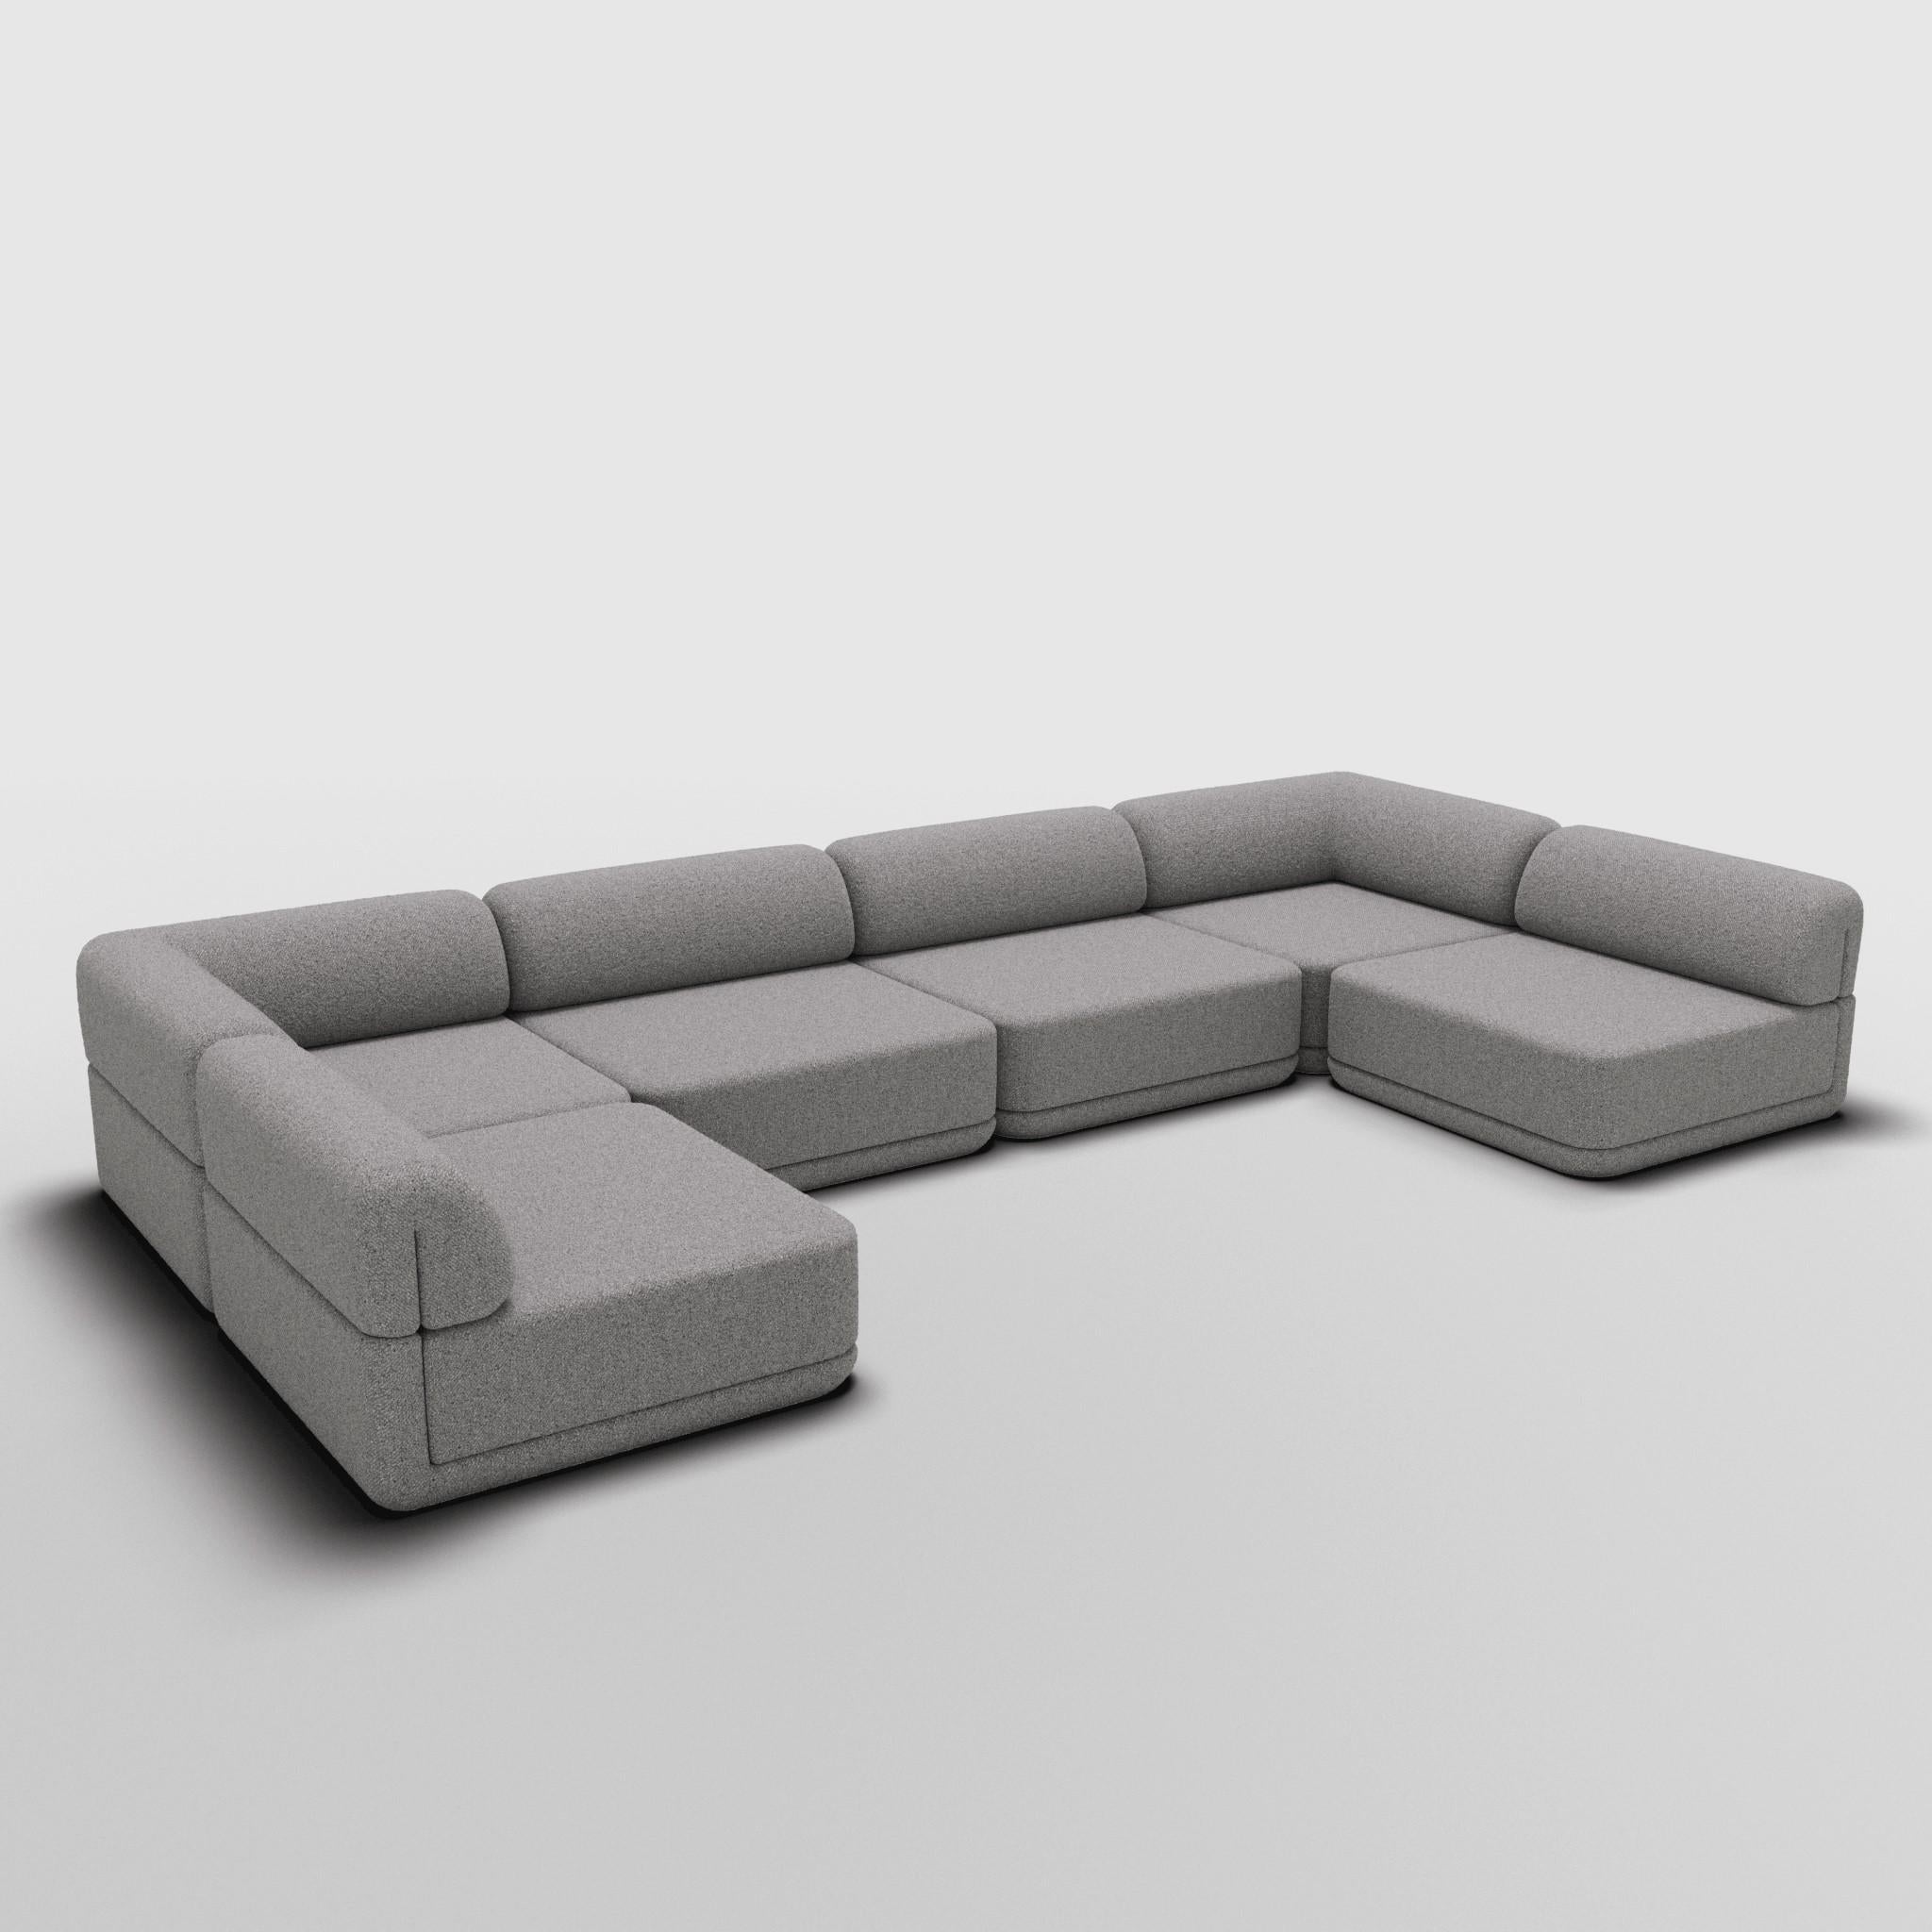 The Cube Sofa - U-förmige Sitzgruppe im Angebot 2